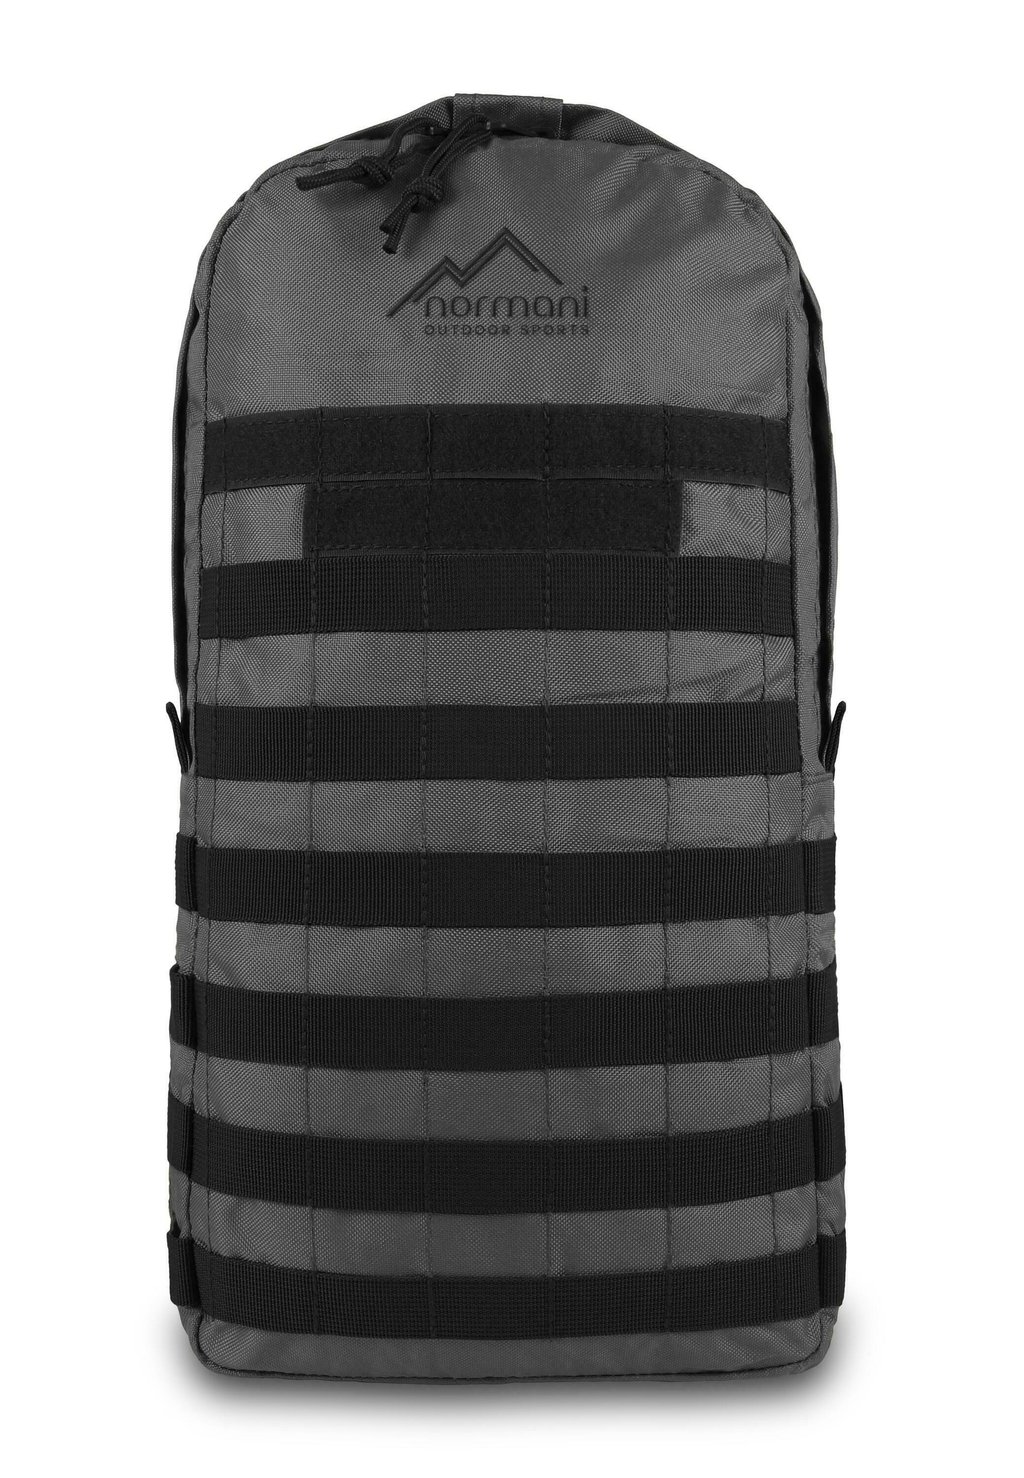 Треккинговый рюкзак BARRACUDA 8L DAYPACK normani Outdoor Sports, цвет anthrazit